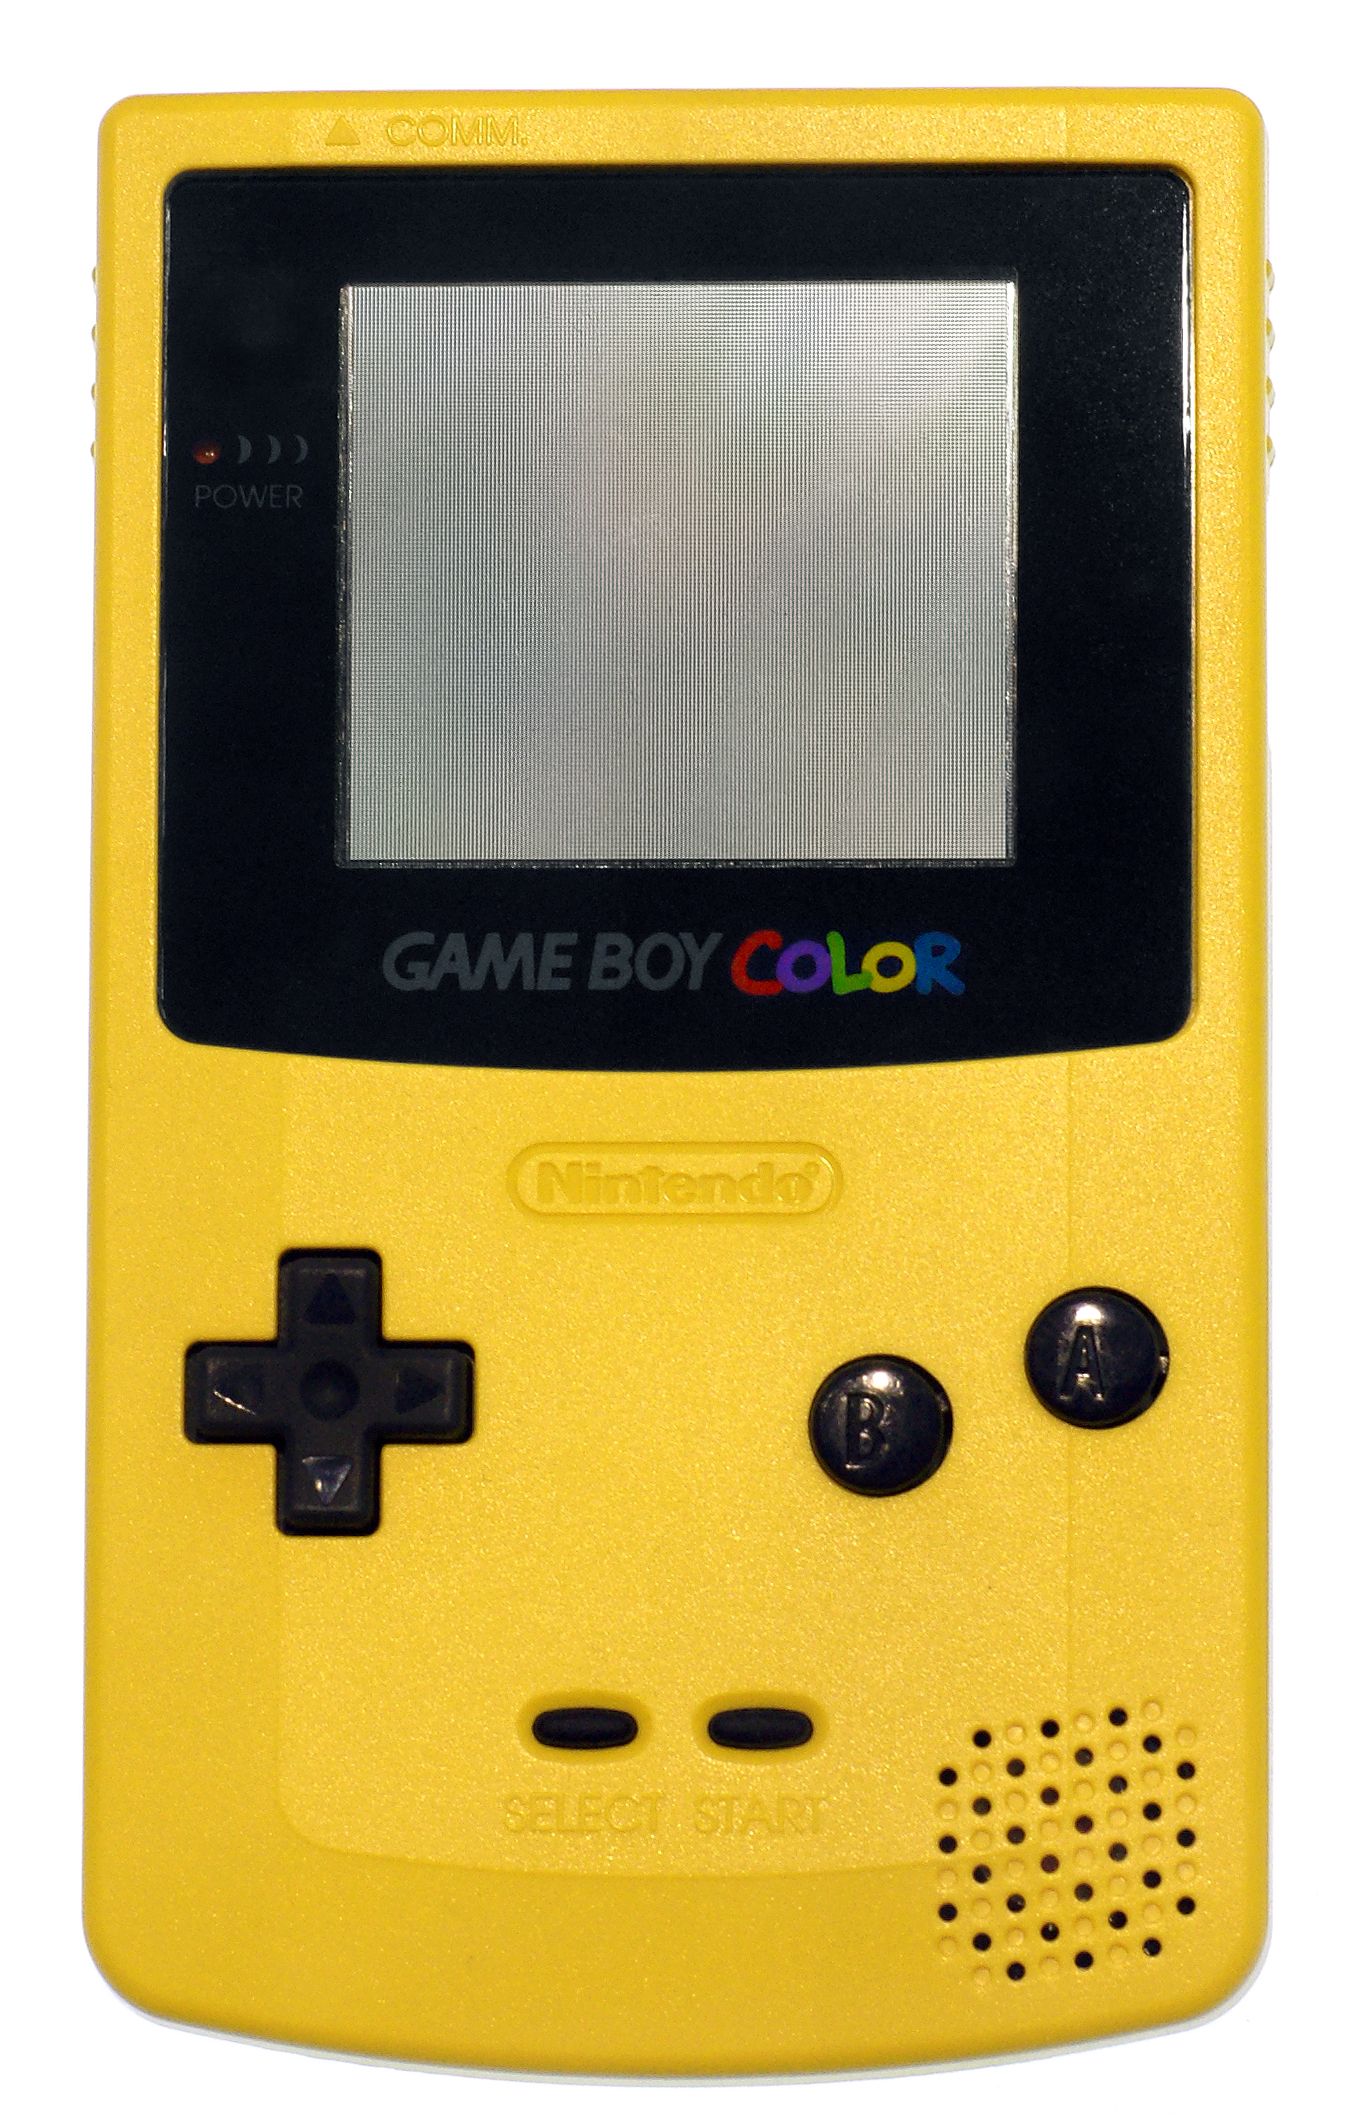 Game Boy Color | Retro Consoles Wiki | Fandom